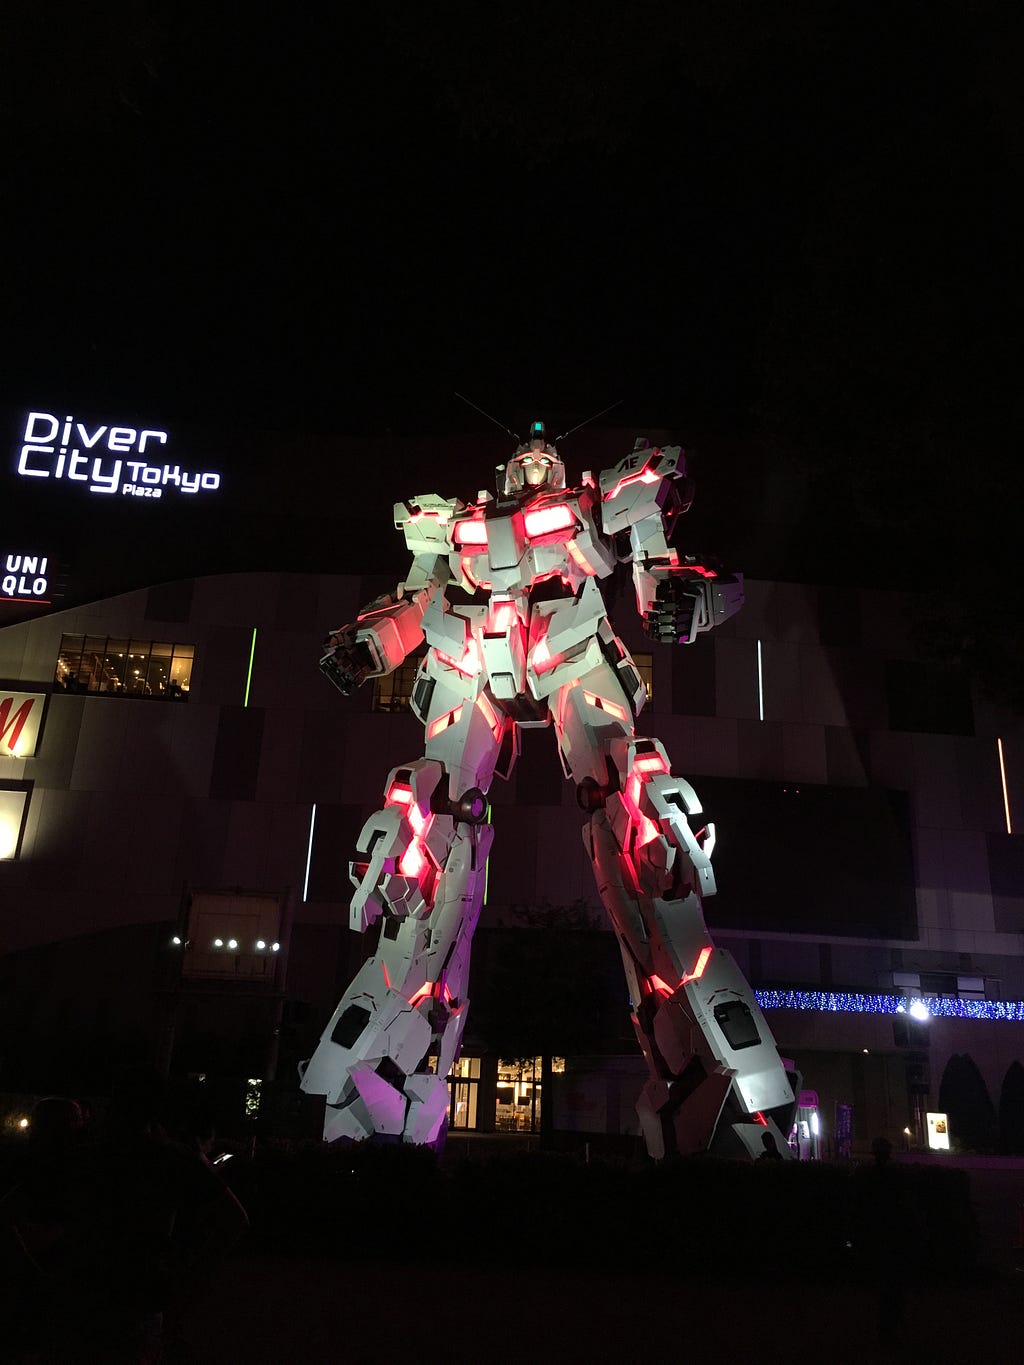 The night view of the Life-Sized Unicorn Gundam Statue at Odaiba, Tokyo